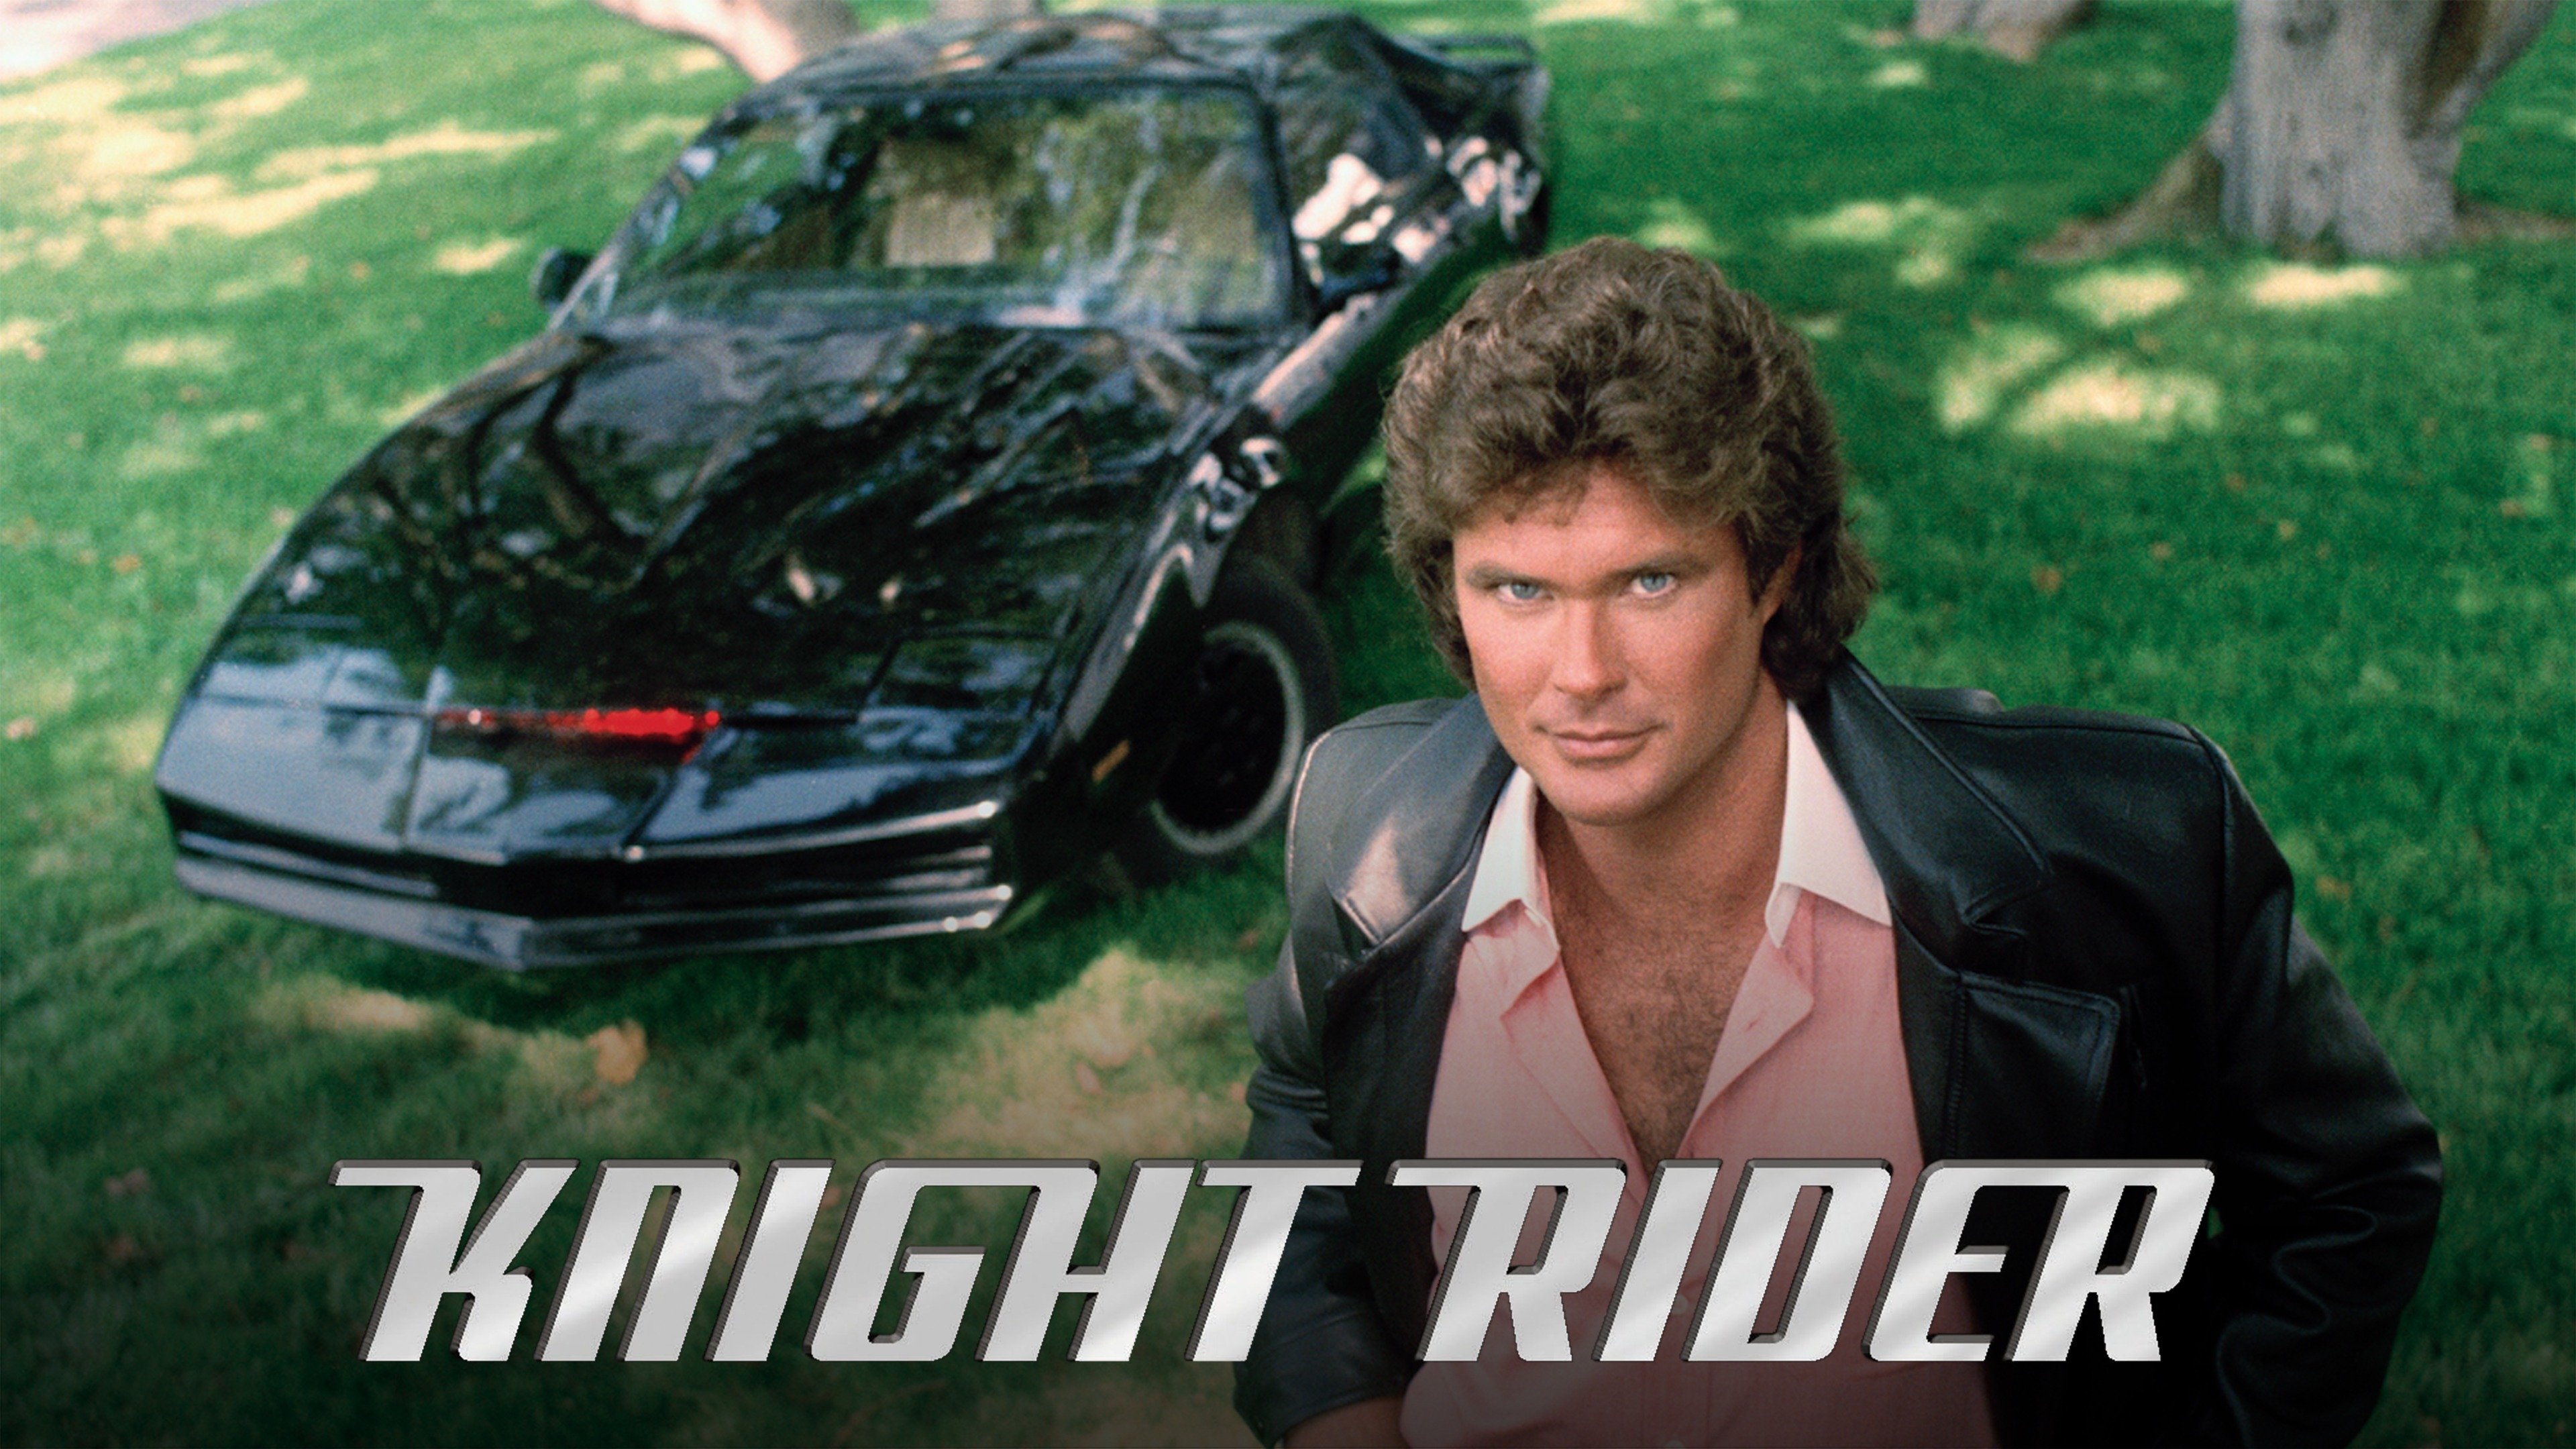 Knight Rider season 2, Streaming episodes online, Classic TV show, Enjoying retro entertainment, 3840x2160 4K Desktop